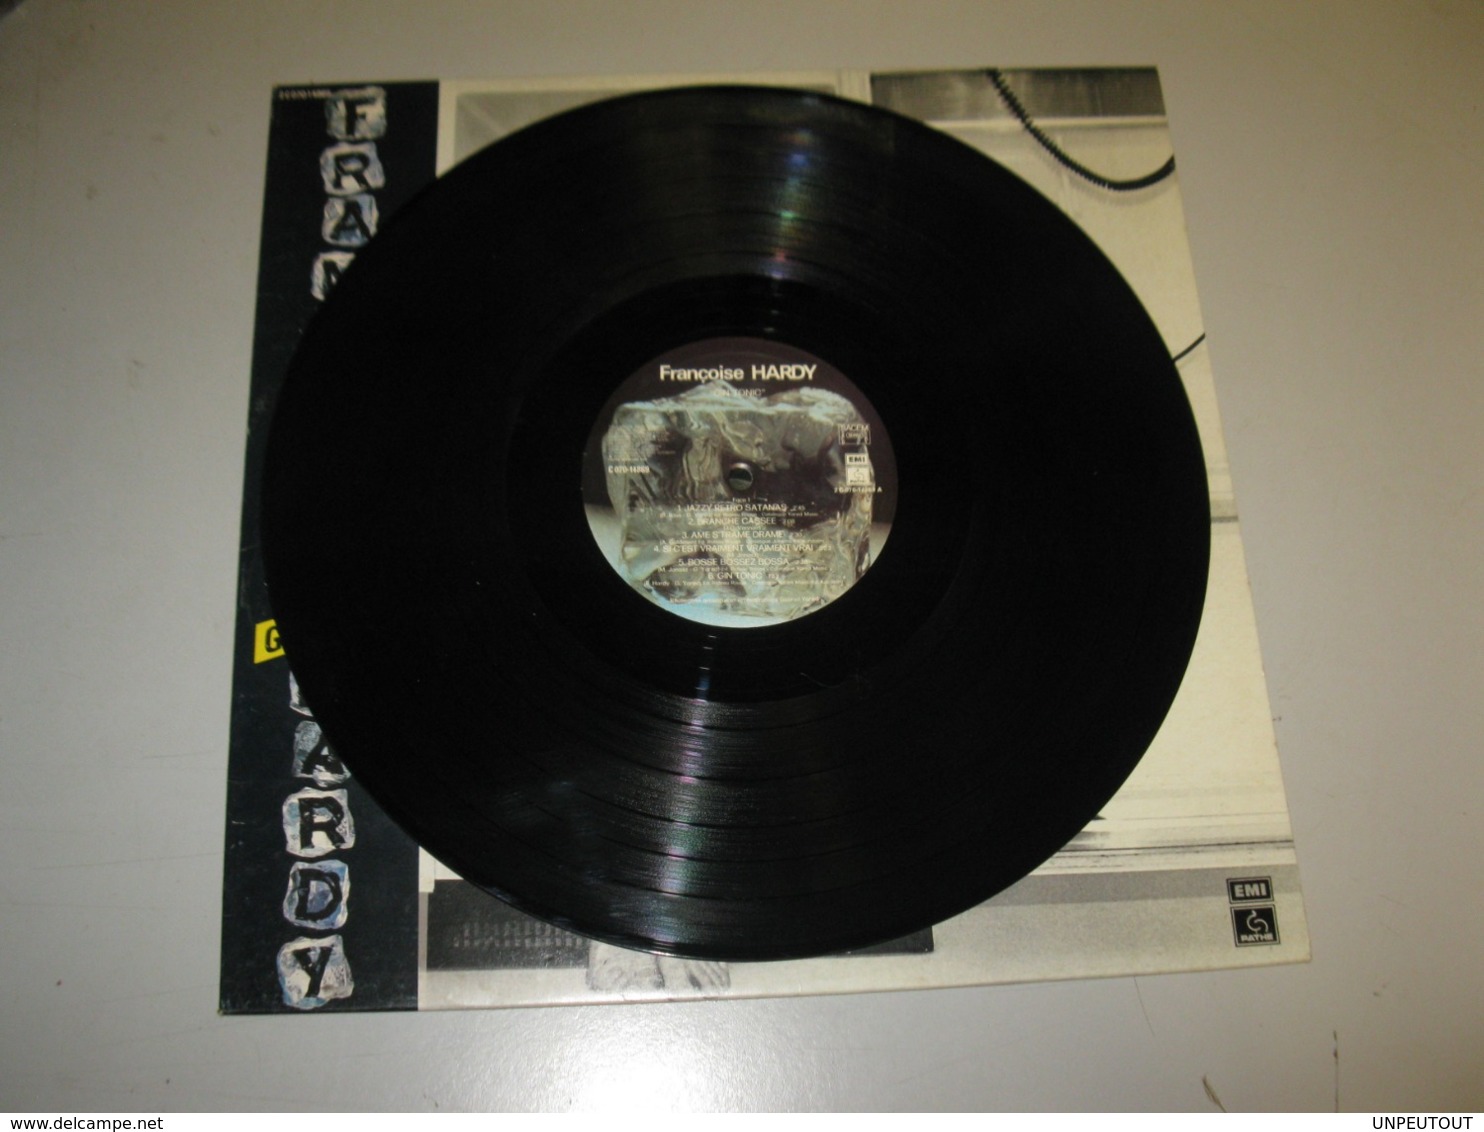 VINYLE FRANCOISE HARDY "GIN TONIC" 33 T PATHE / EMI (1980) - Otros - Canción Francesa